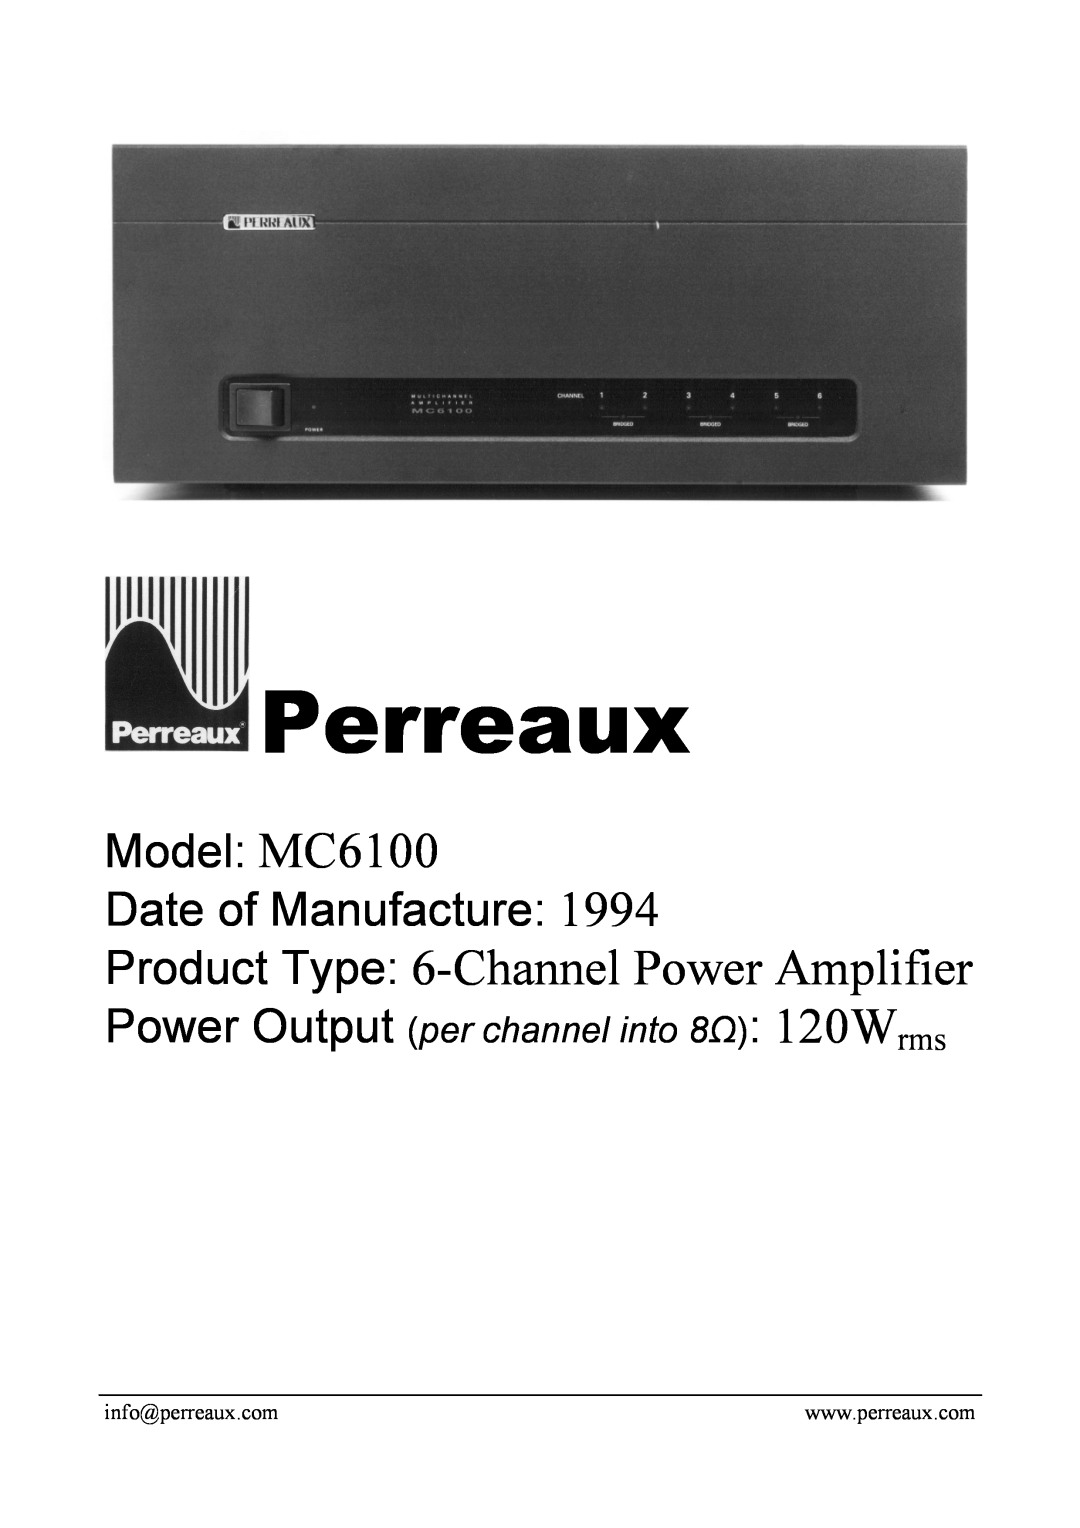 Perreaux manual Perreaux, Product Type 6-ChannelPower Amplifier, Model MC6100 Date of Manufacture 